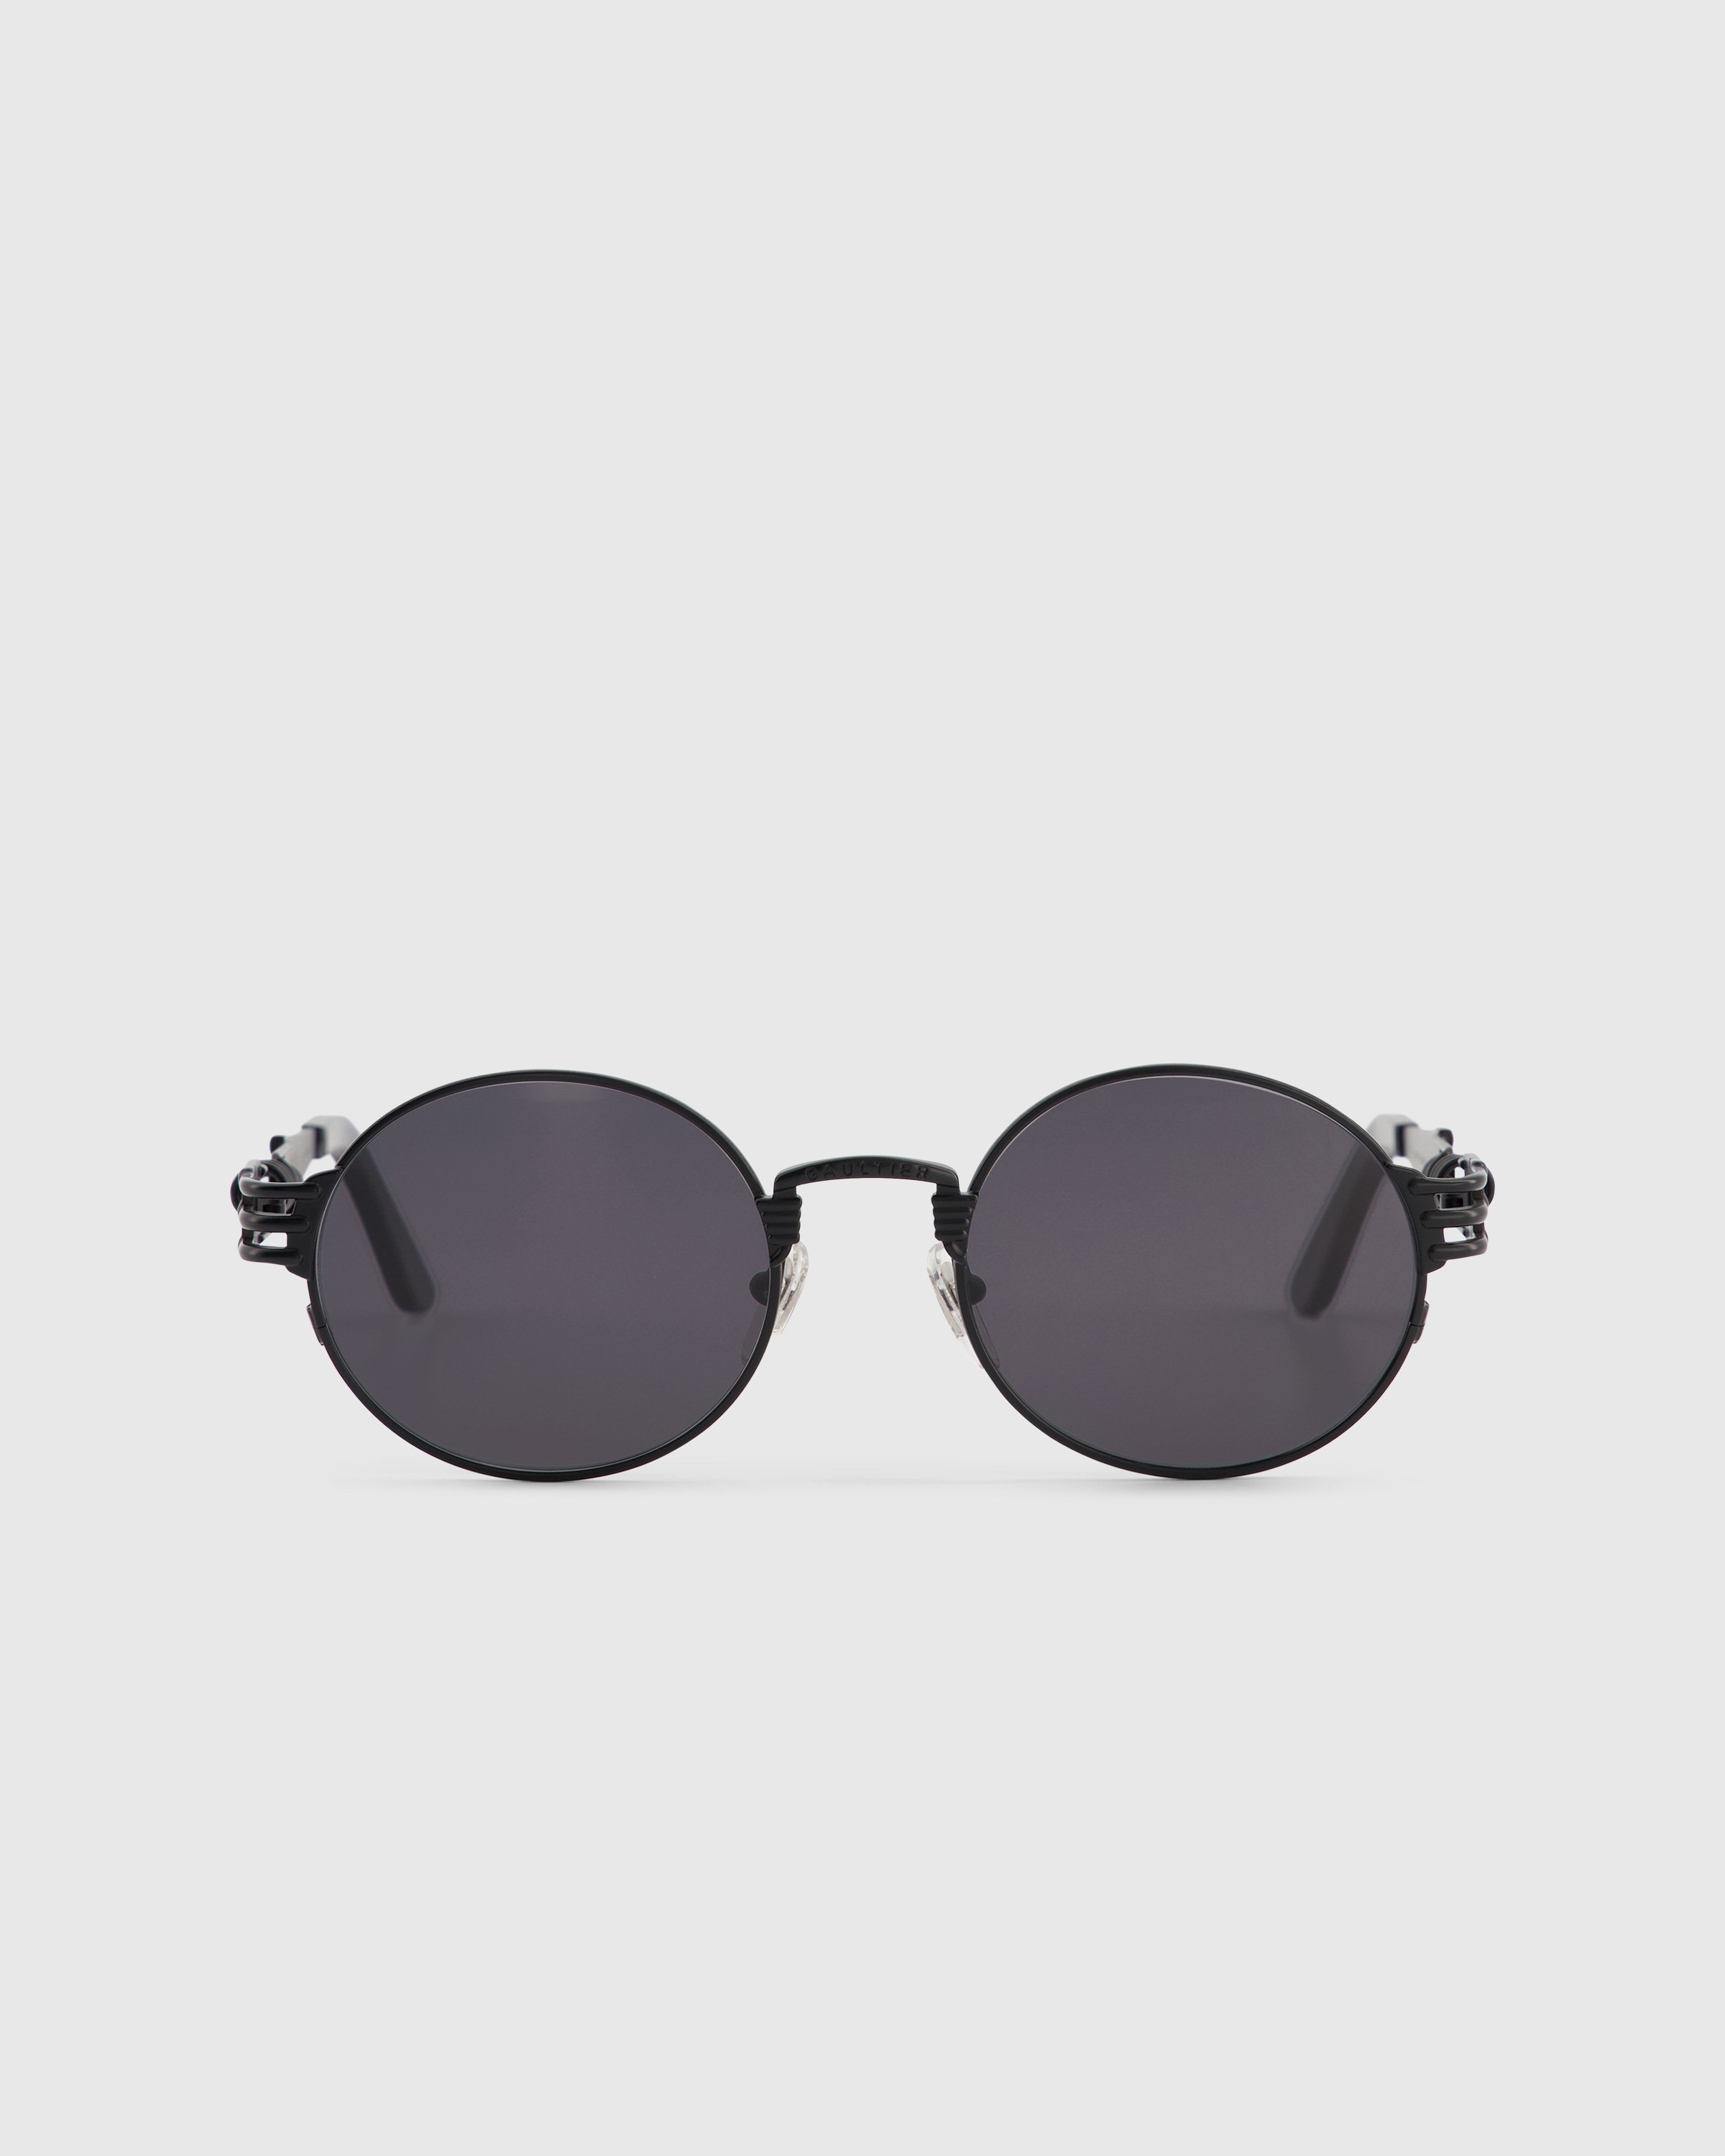 Jean Paul Gaultier x Burna Boy - 56-6106 Double Resort Sunglasses Black - Accessories - Black - Image 1